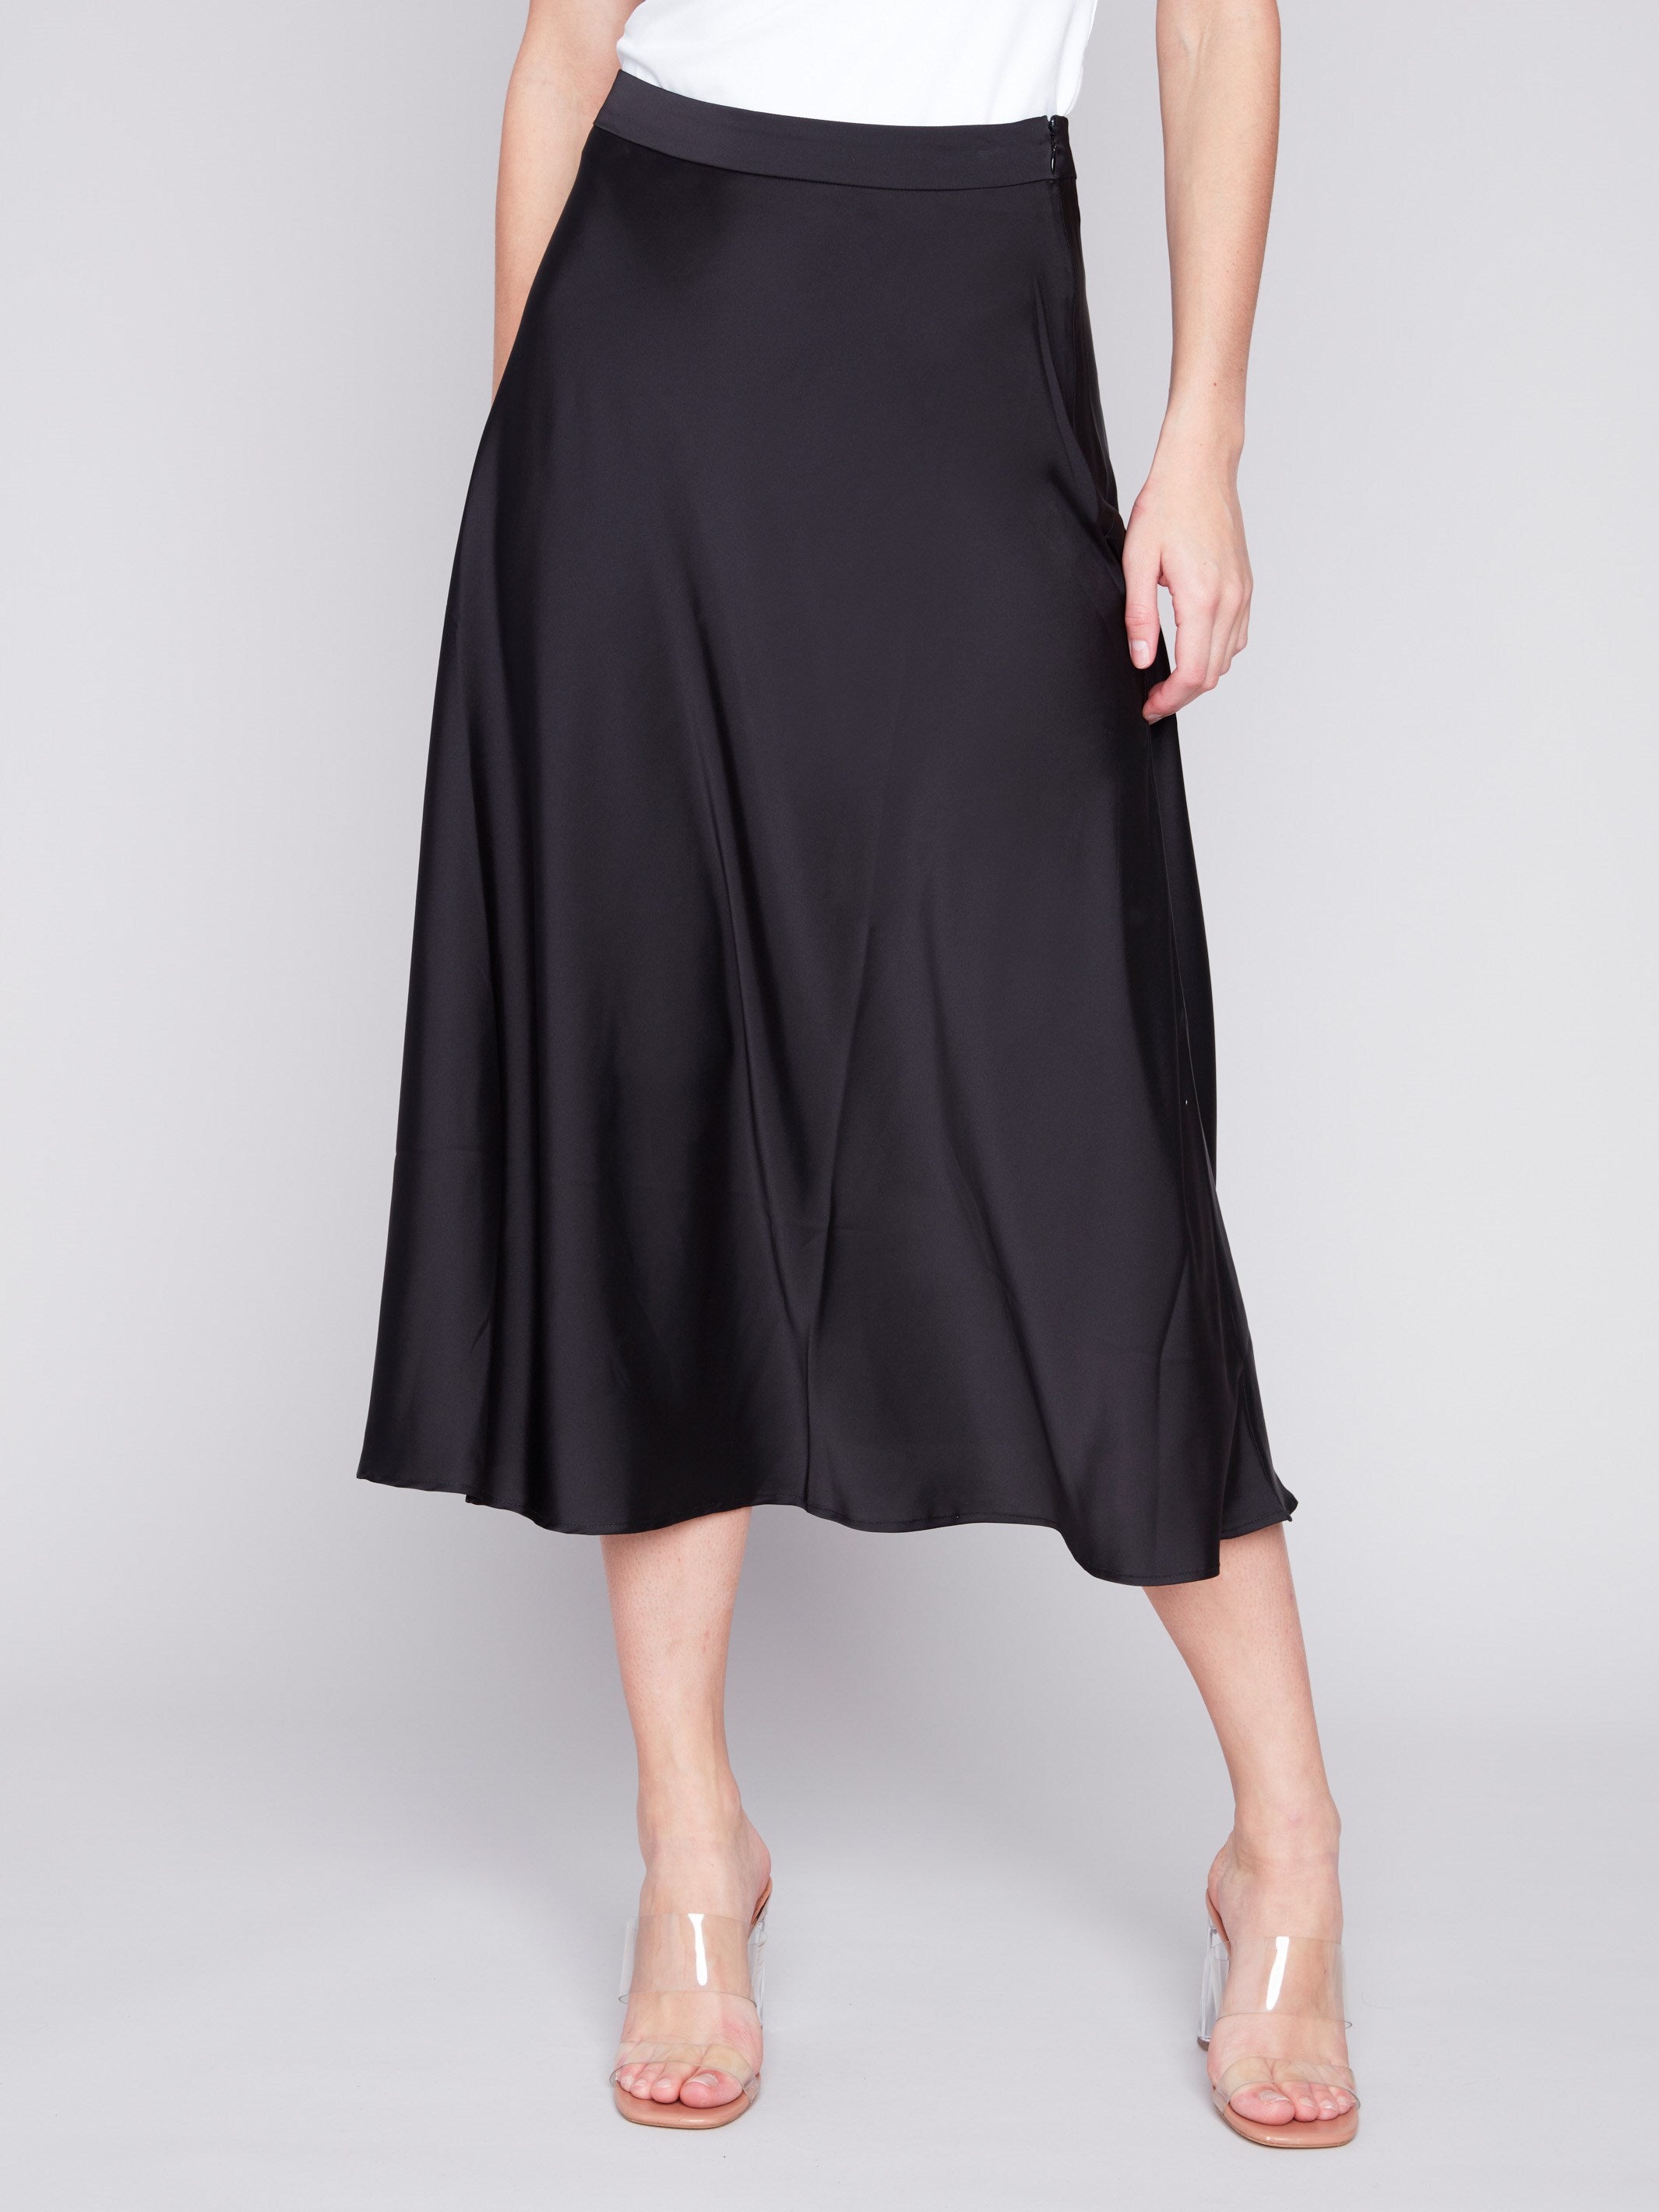 Long Satin Skirt - Black - Charlie B Collection Canada - Image 3